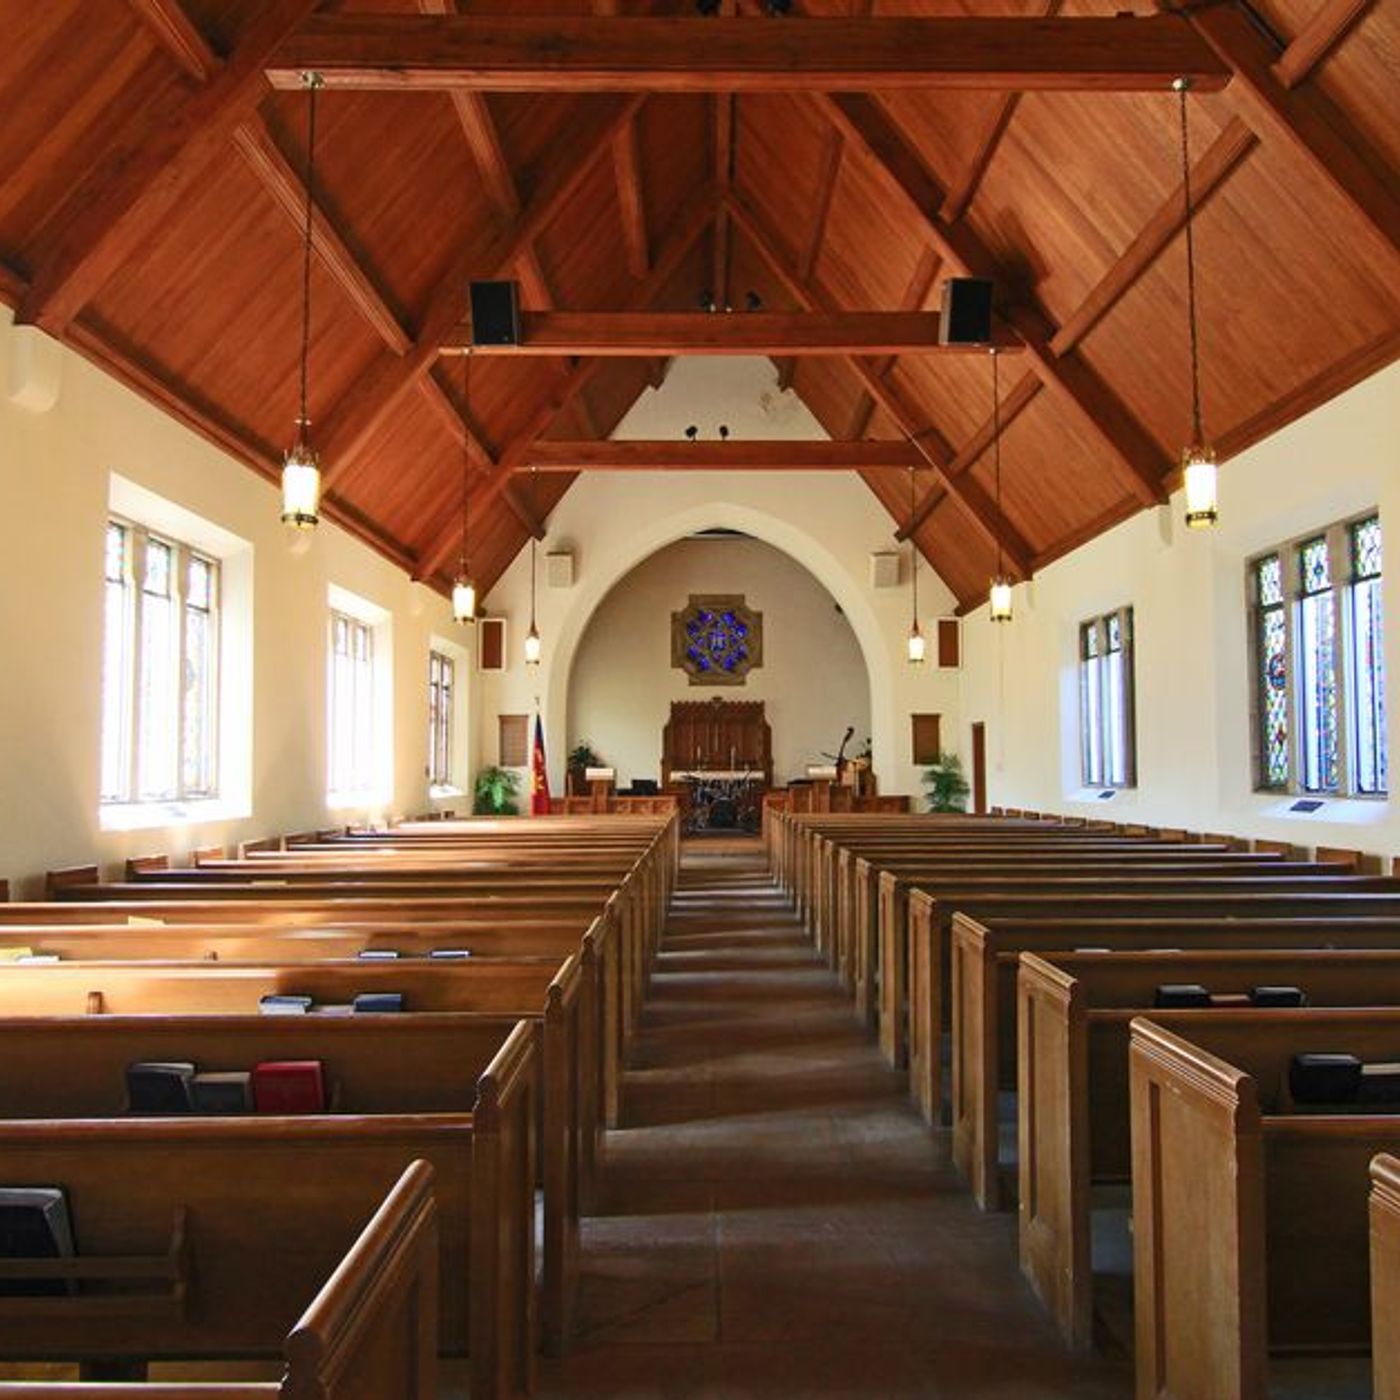 Church Membership in Serious Decline